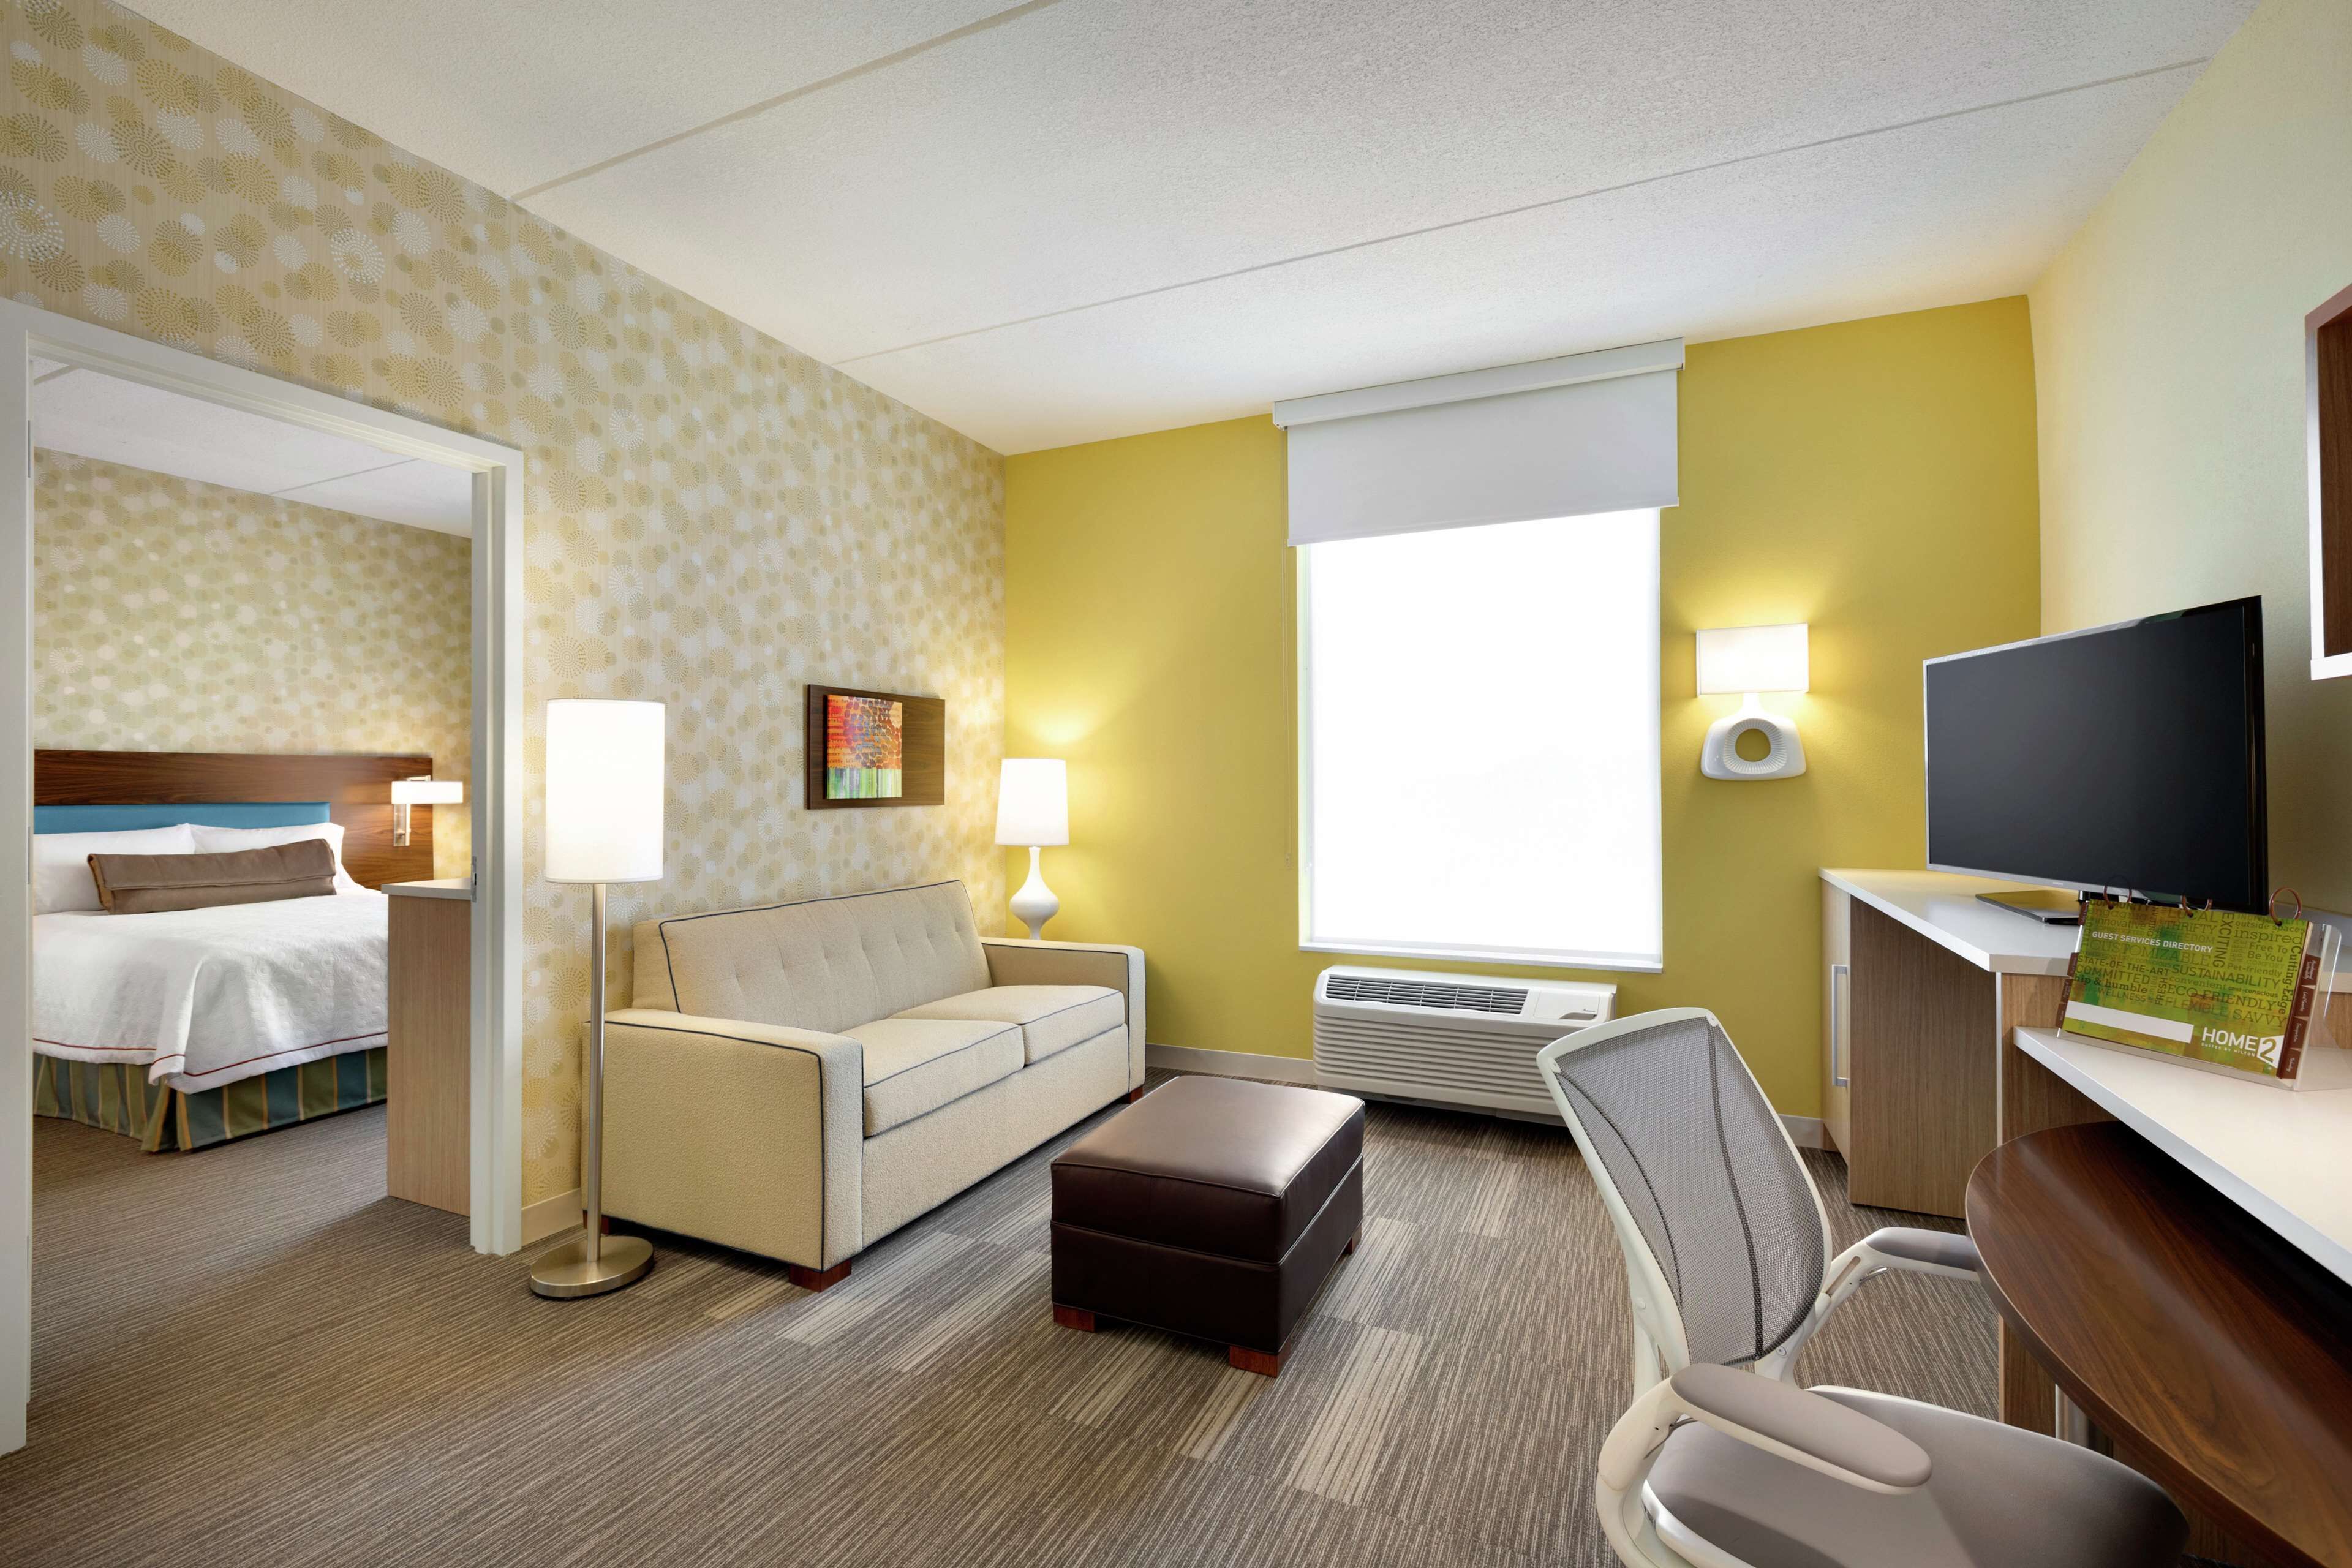 Home2 Suites by Hilton Saratoga/Malta